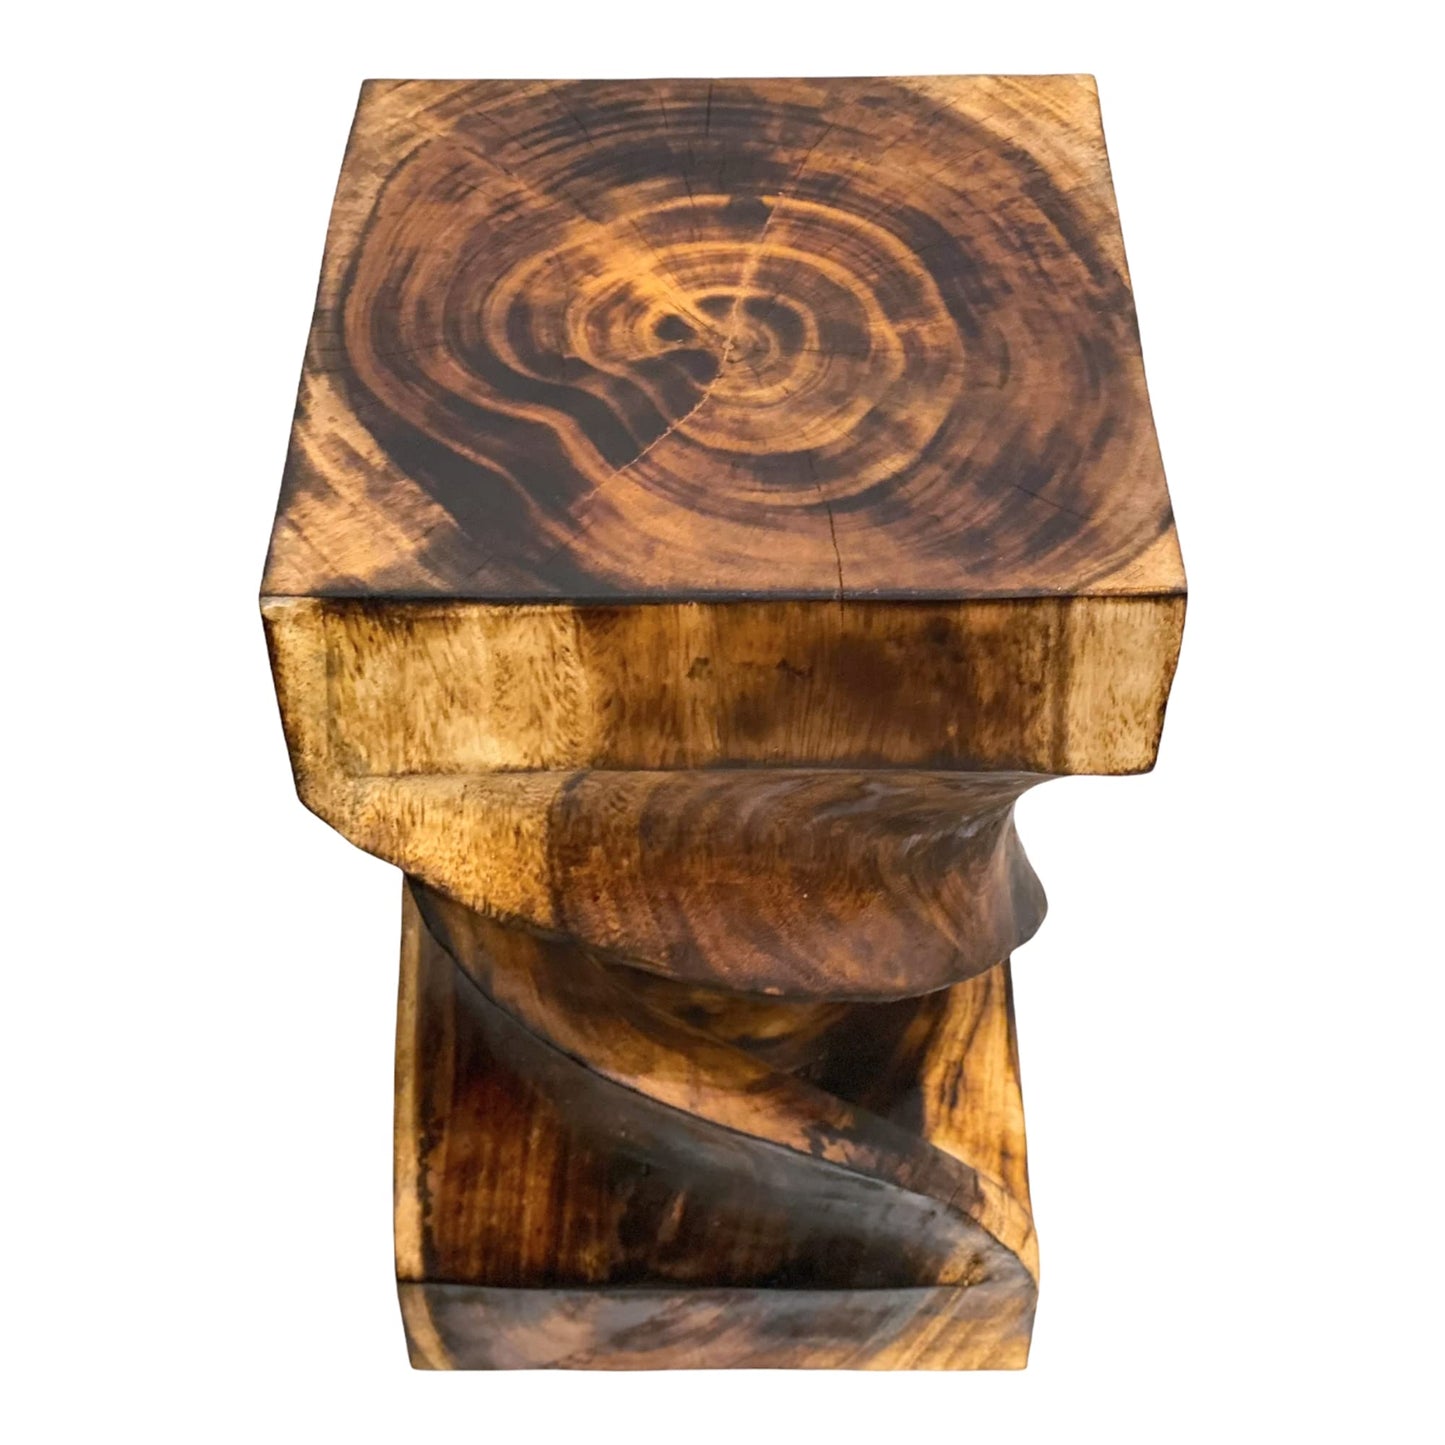 Holz Beistelltisch - Holzhocker Couchtisch - Flambierter Handgefertigt - Gedreht aus massivem Suarholz - 50x28x28 cm